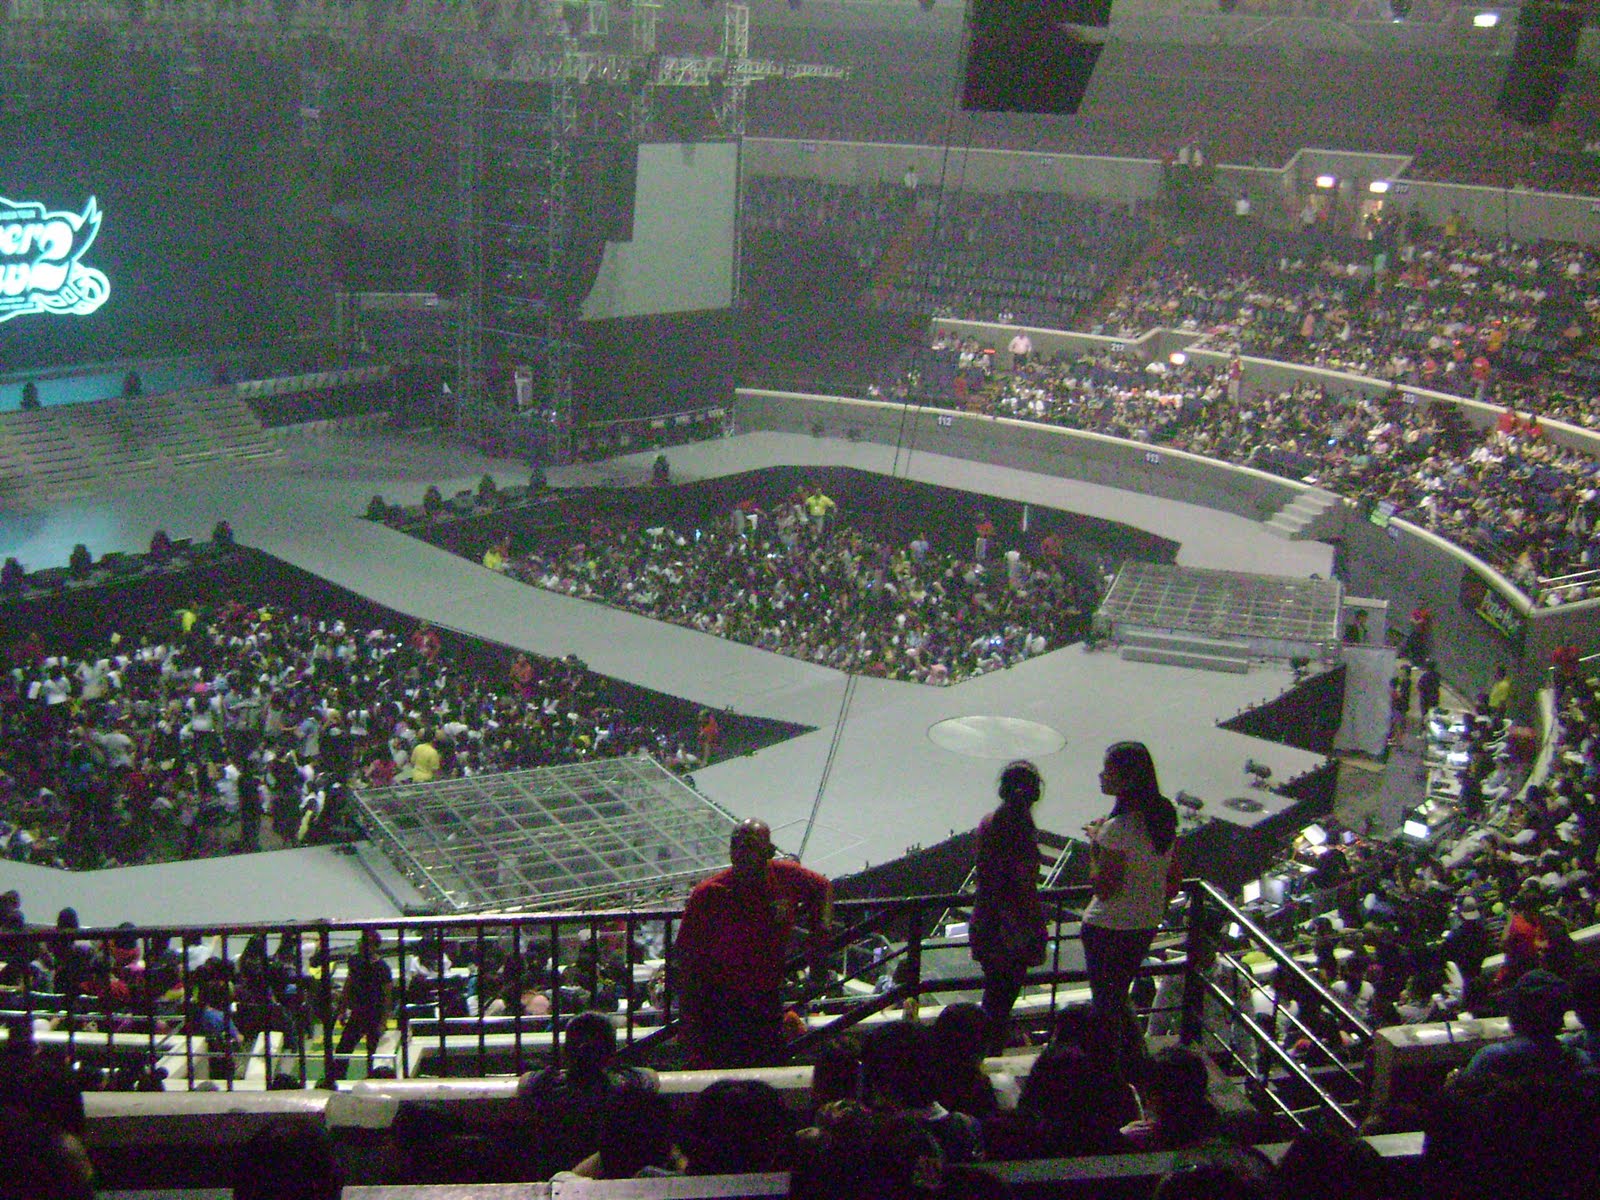 Araneta Coliseum Seating Layout